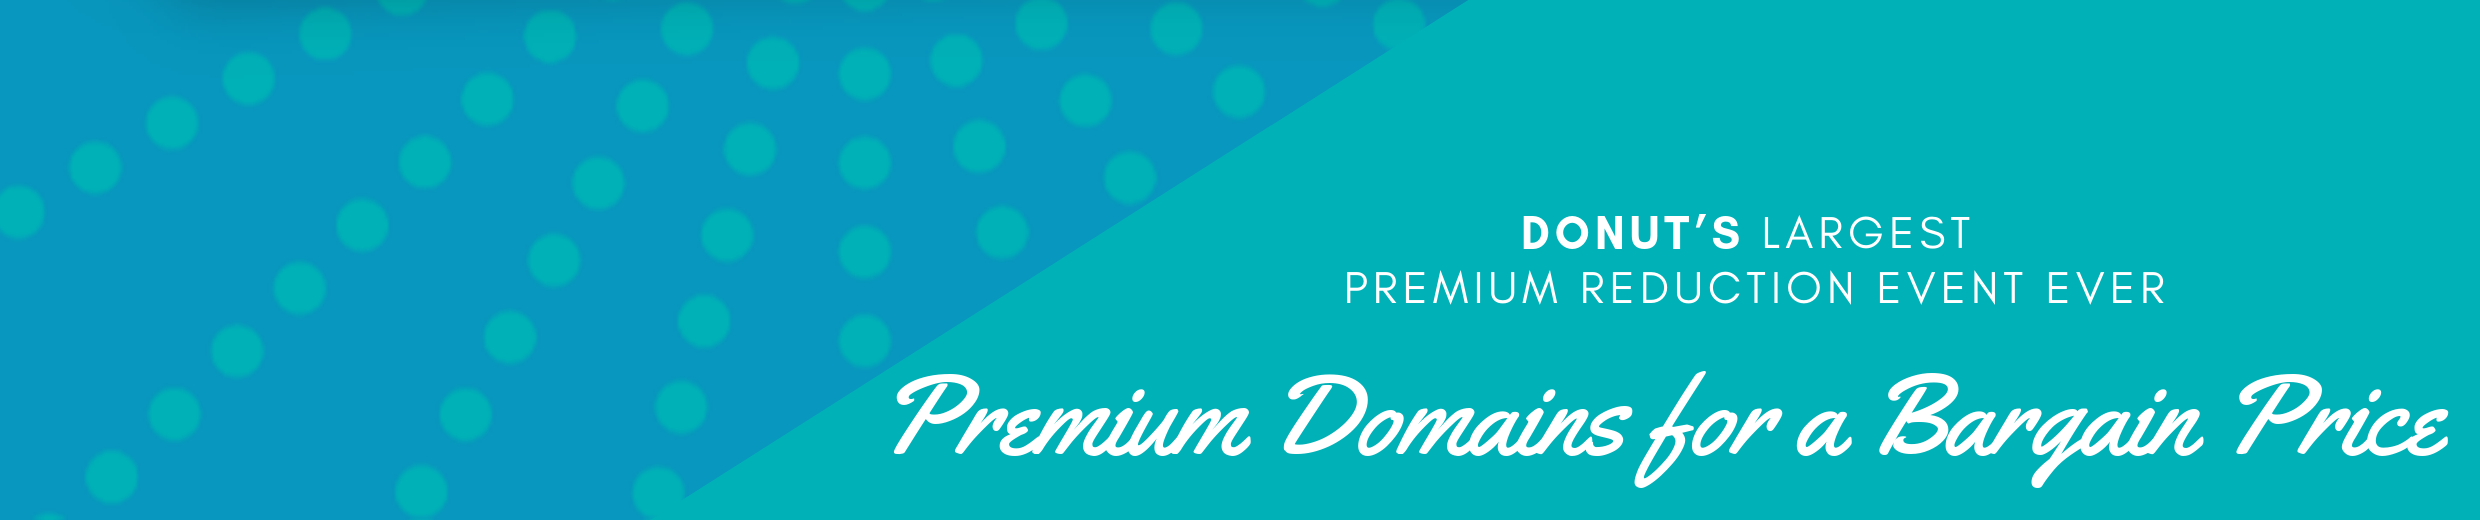 premium domains for a bargain price